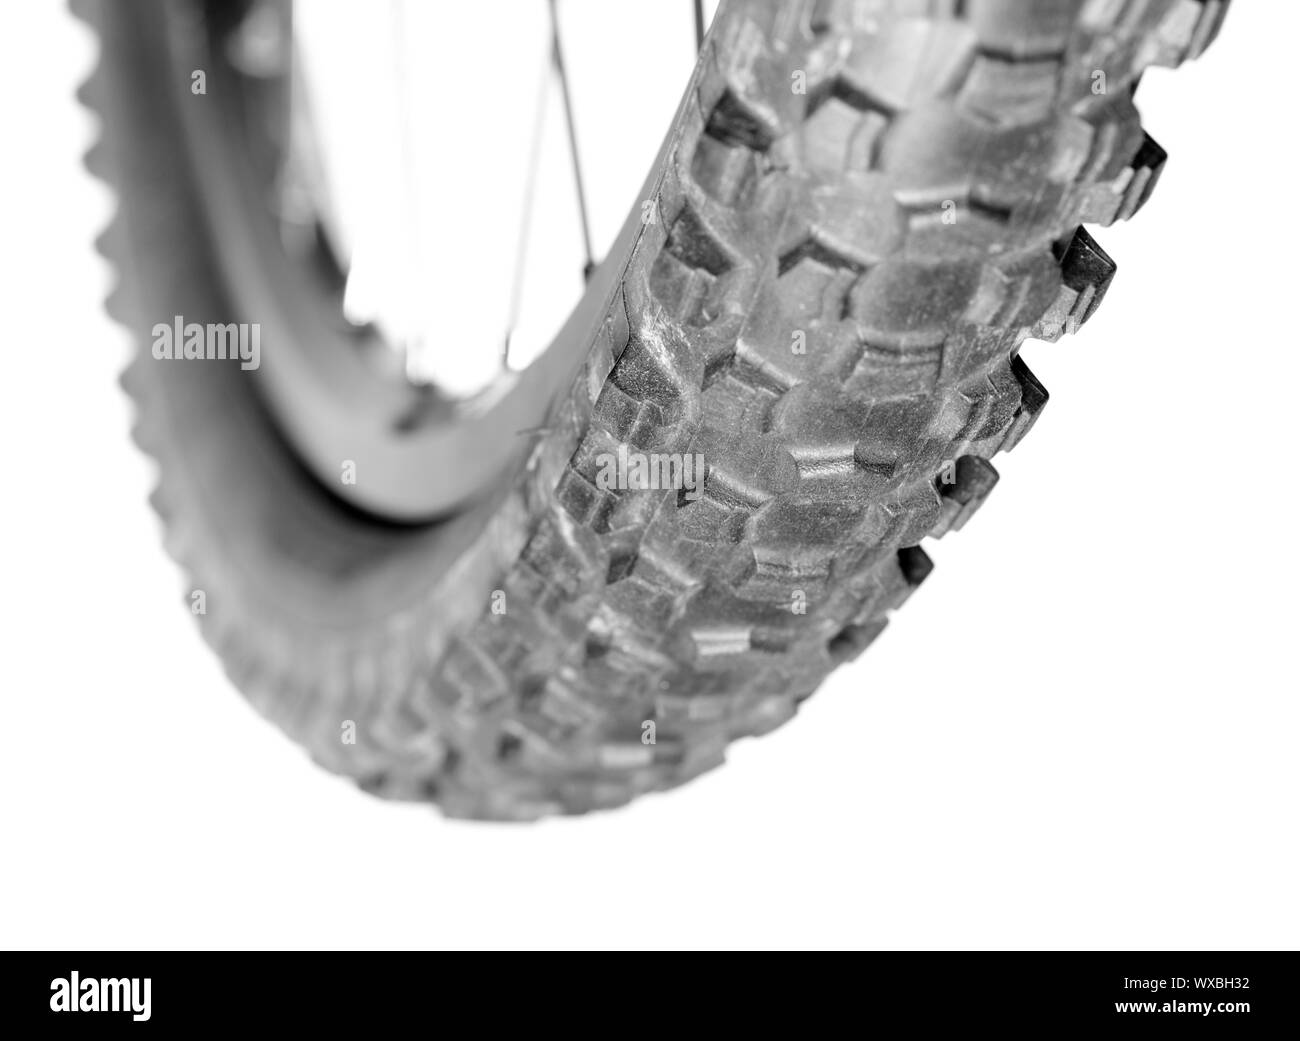 Knobby mountain bike tire close-up Stock Photo